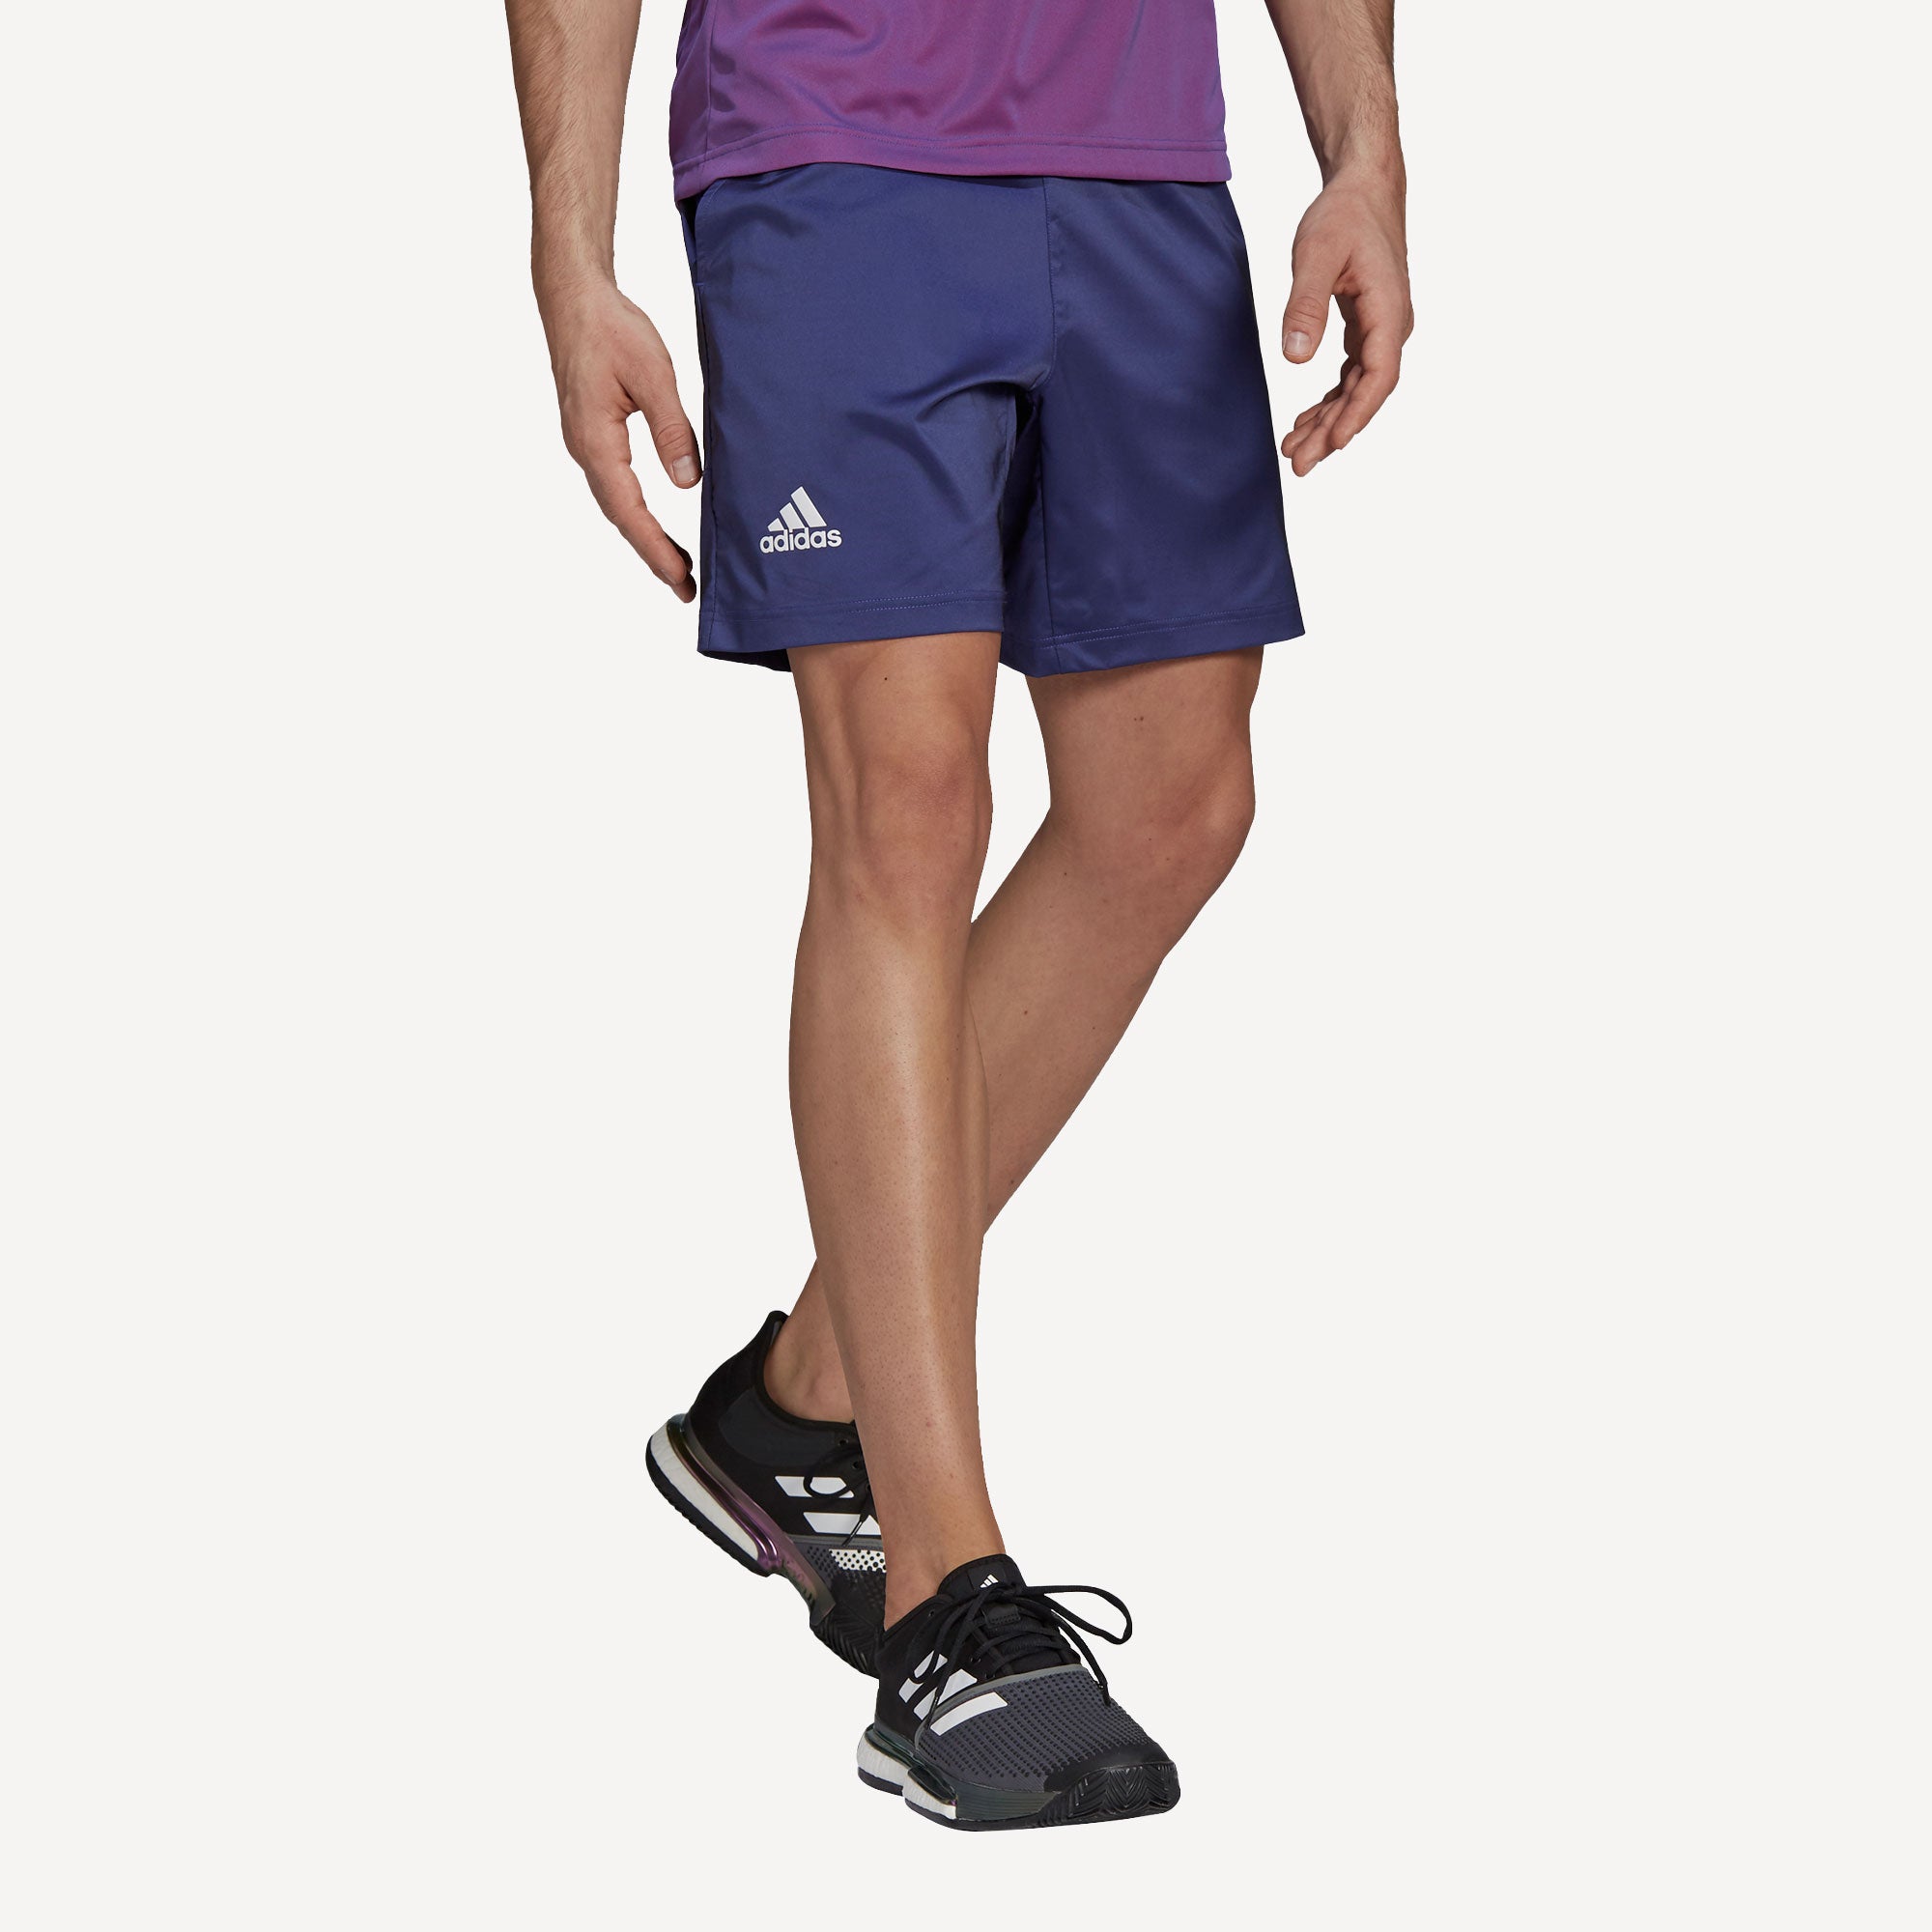 adidas Ergo Primeblue Men's 7-Inch Tennis Shorts Blue (3)